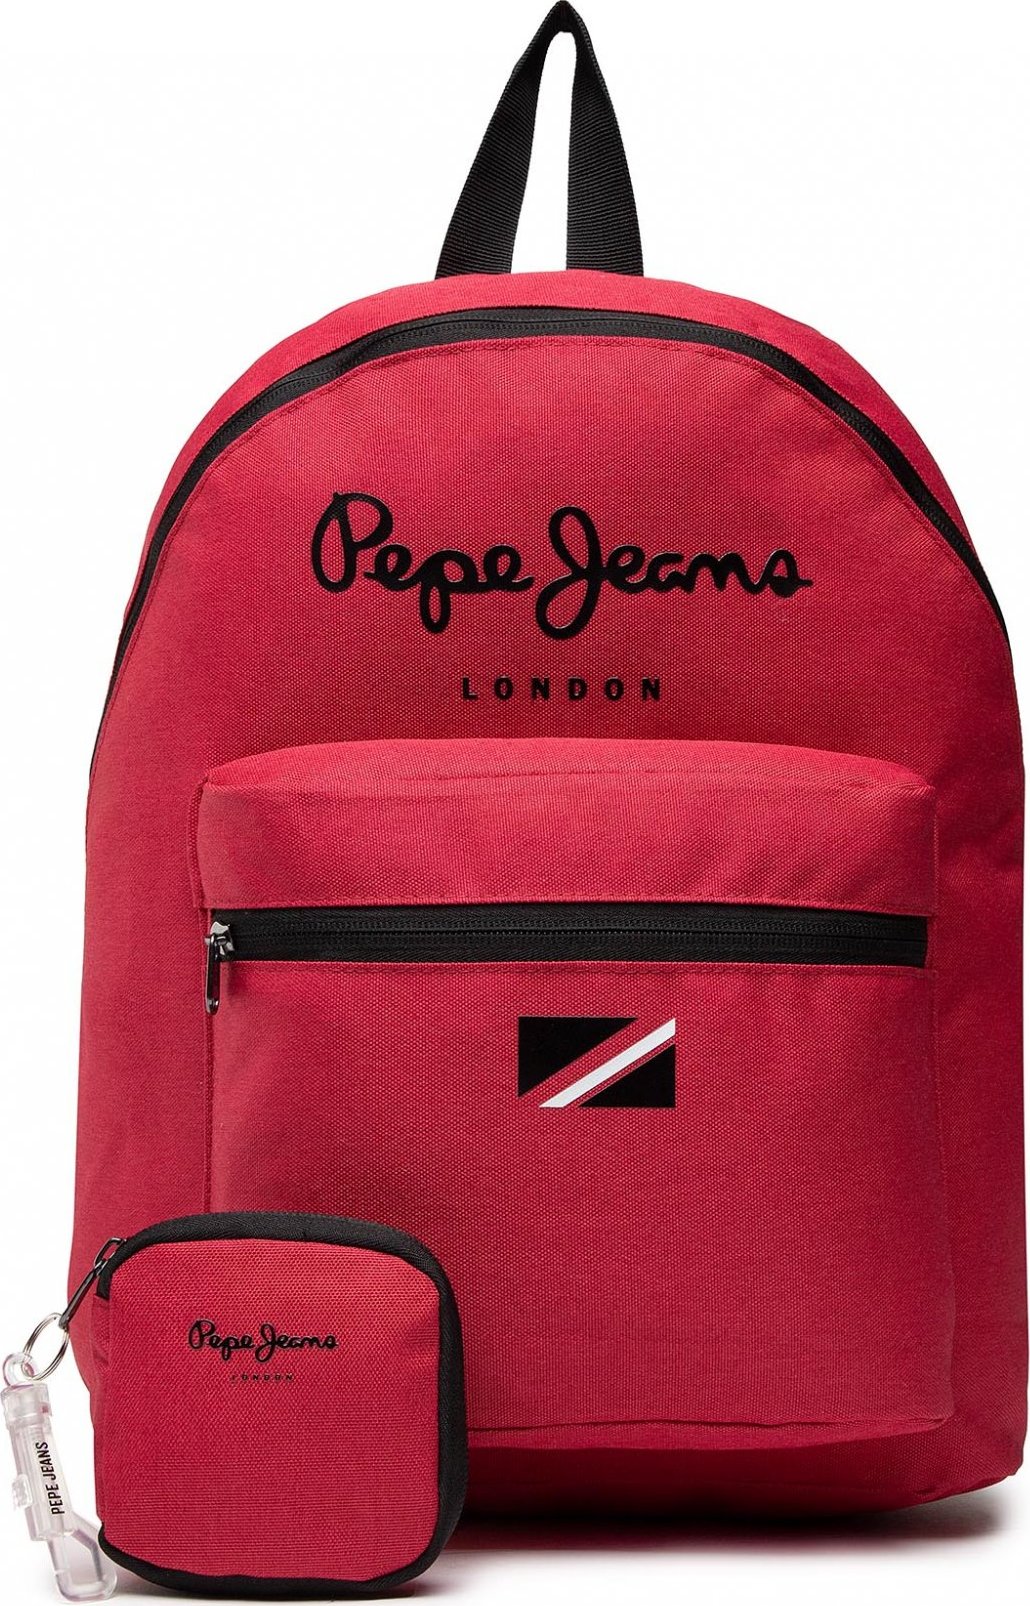 Pepe Jeans London Backpack PU030058